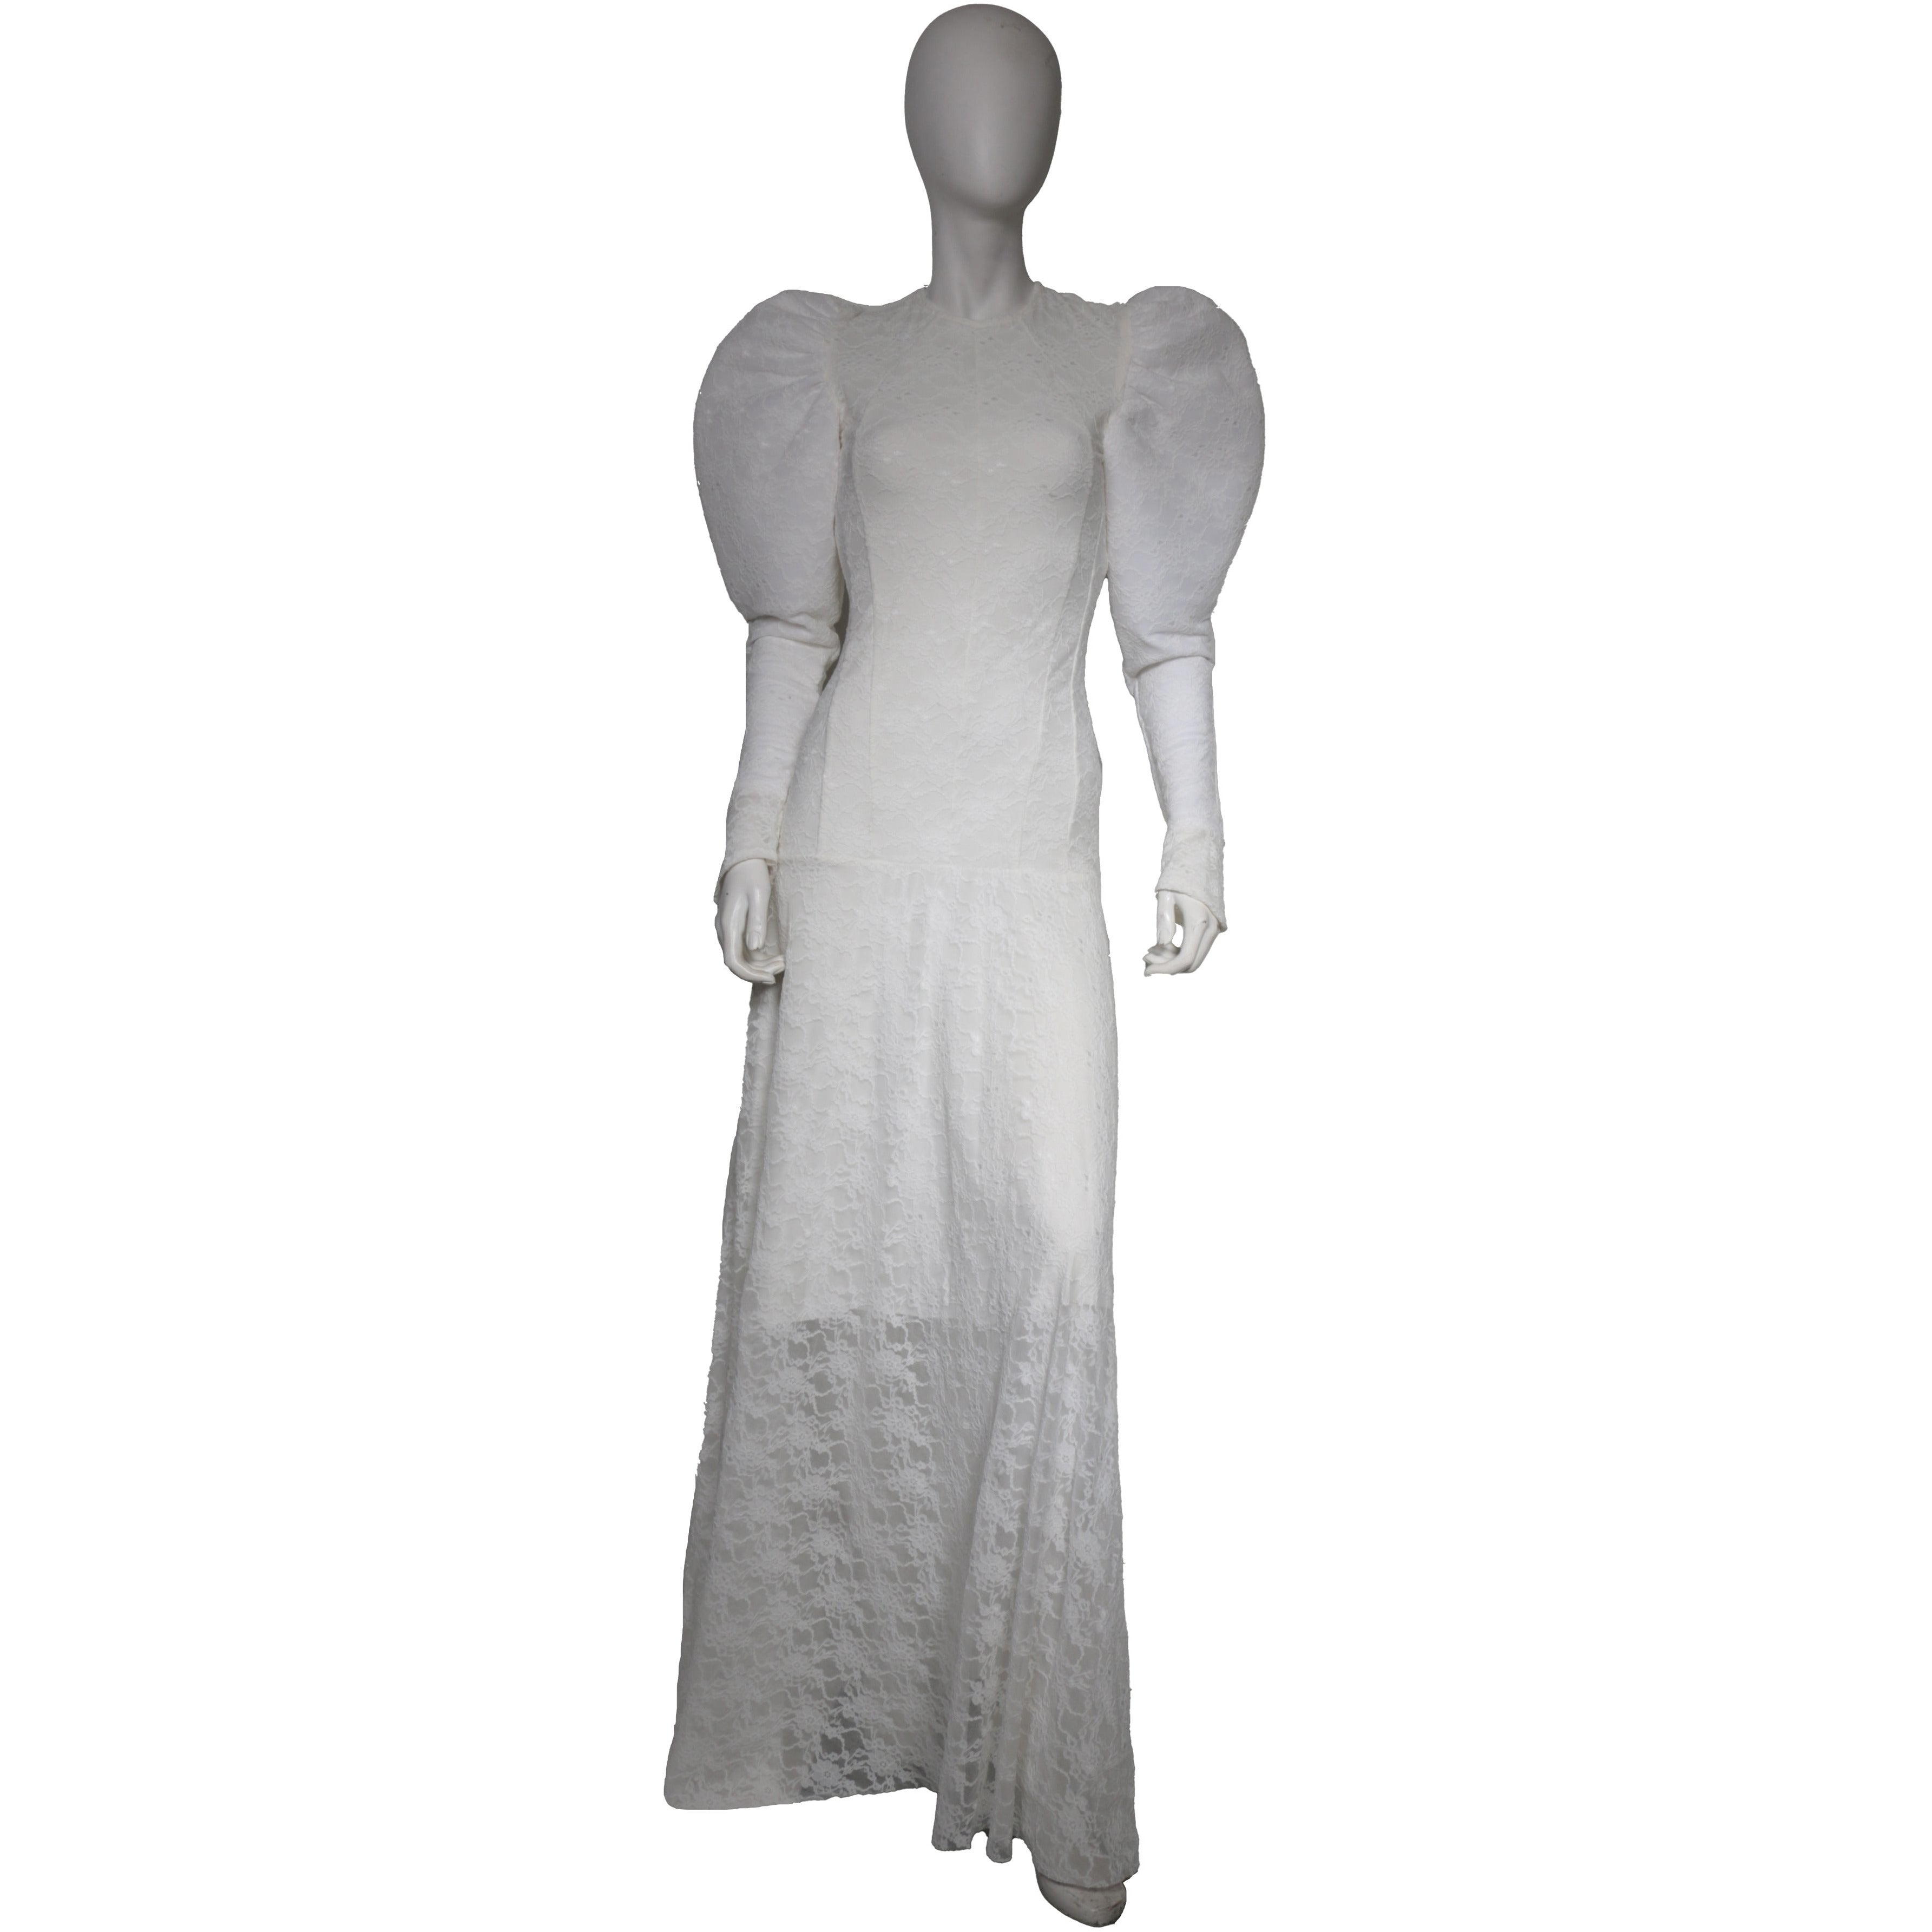 Futuristic angelic gown